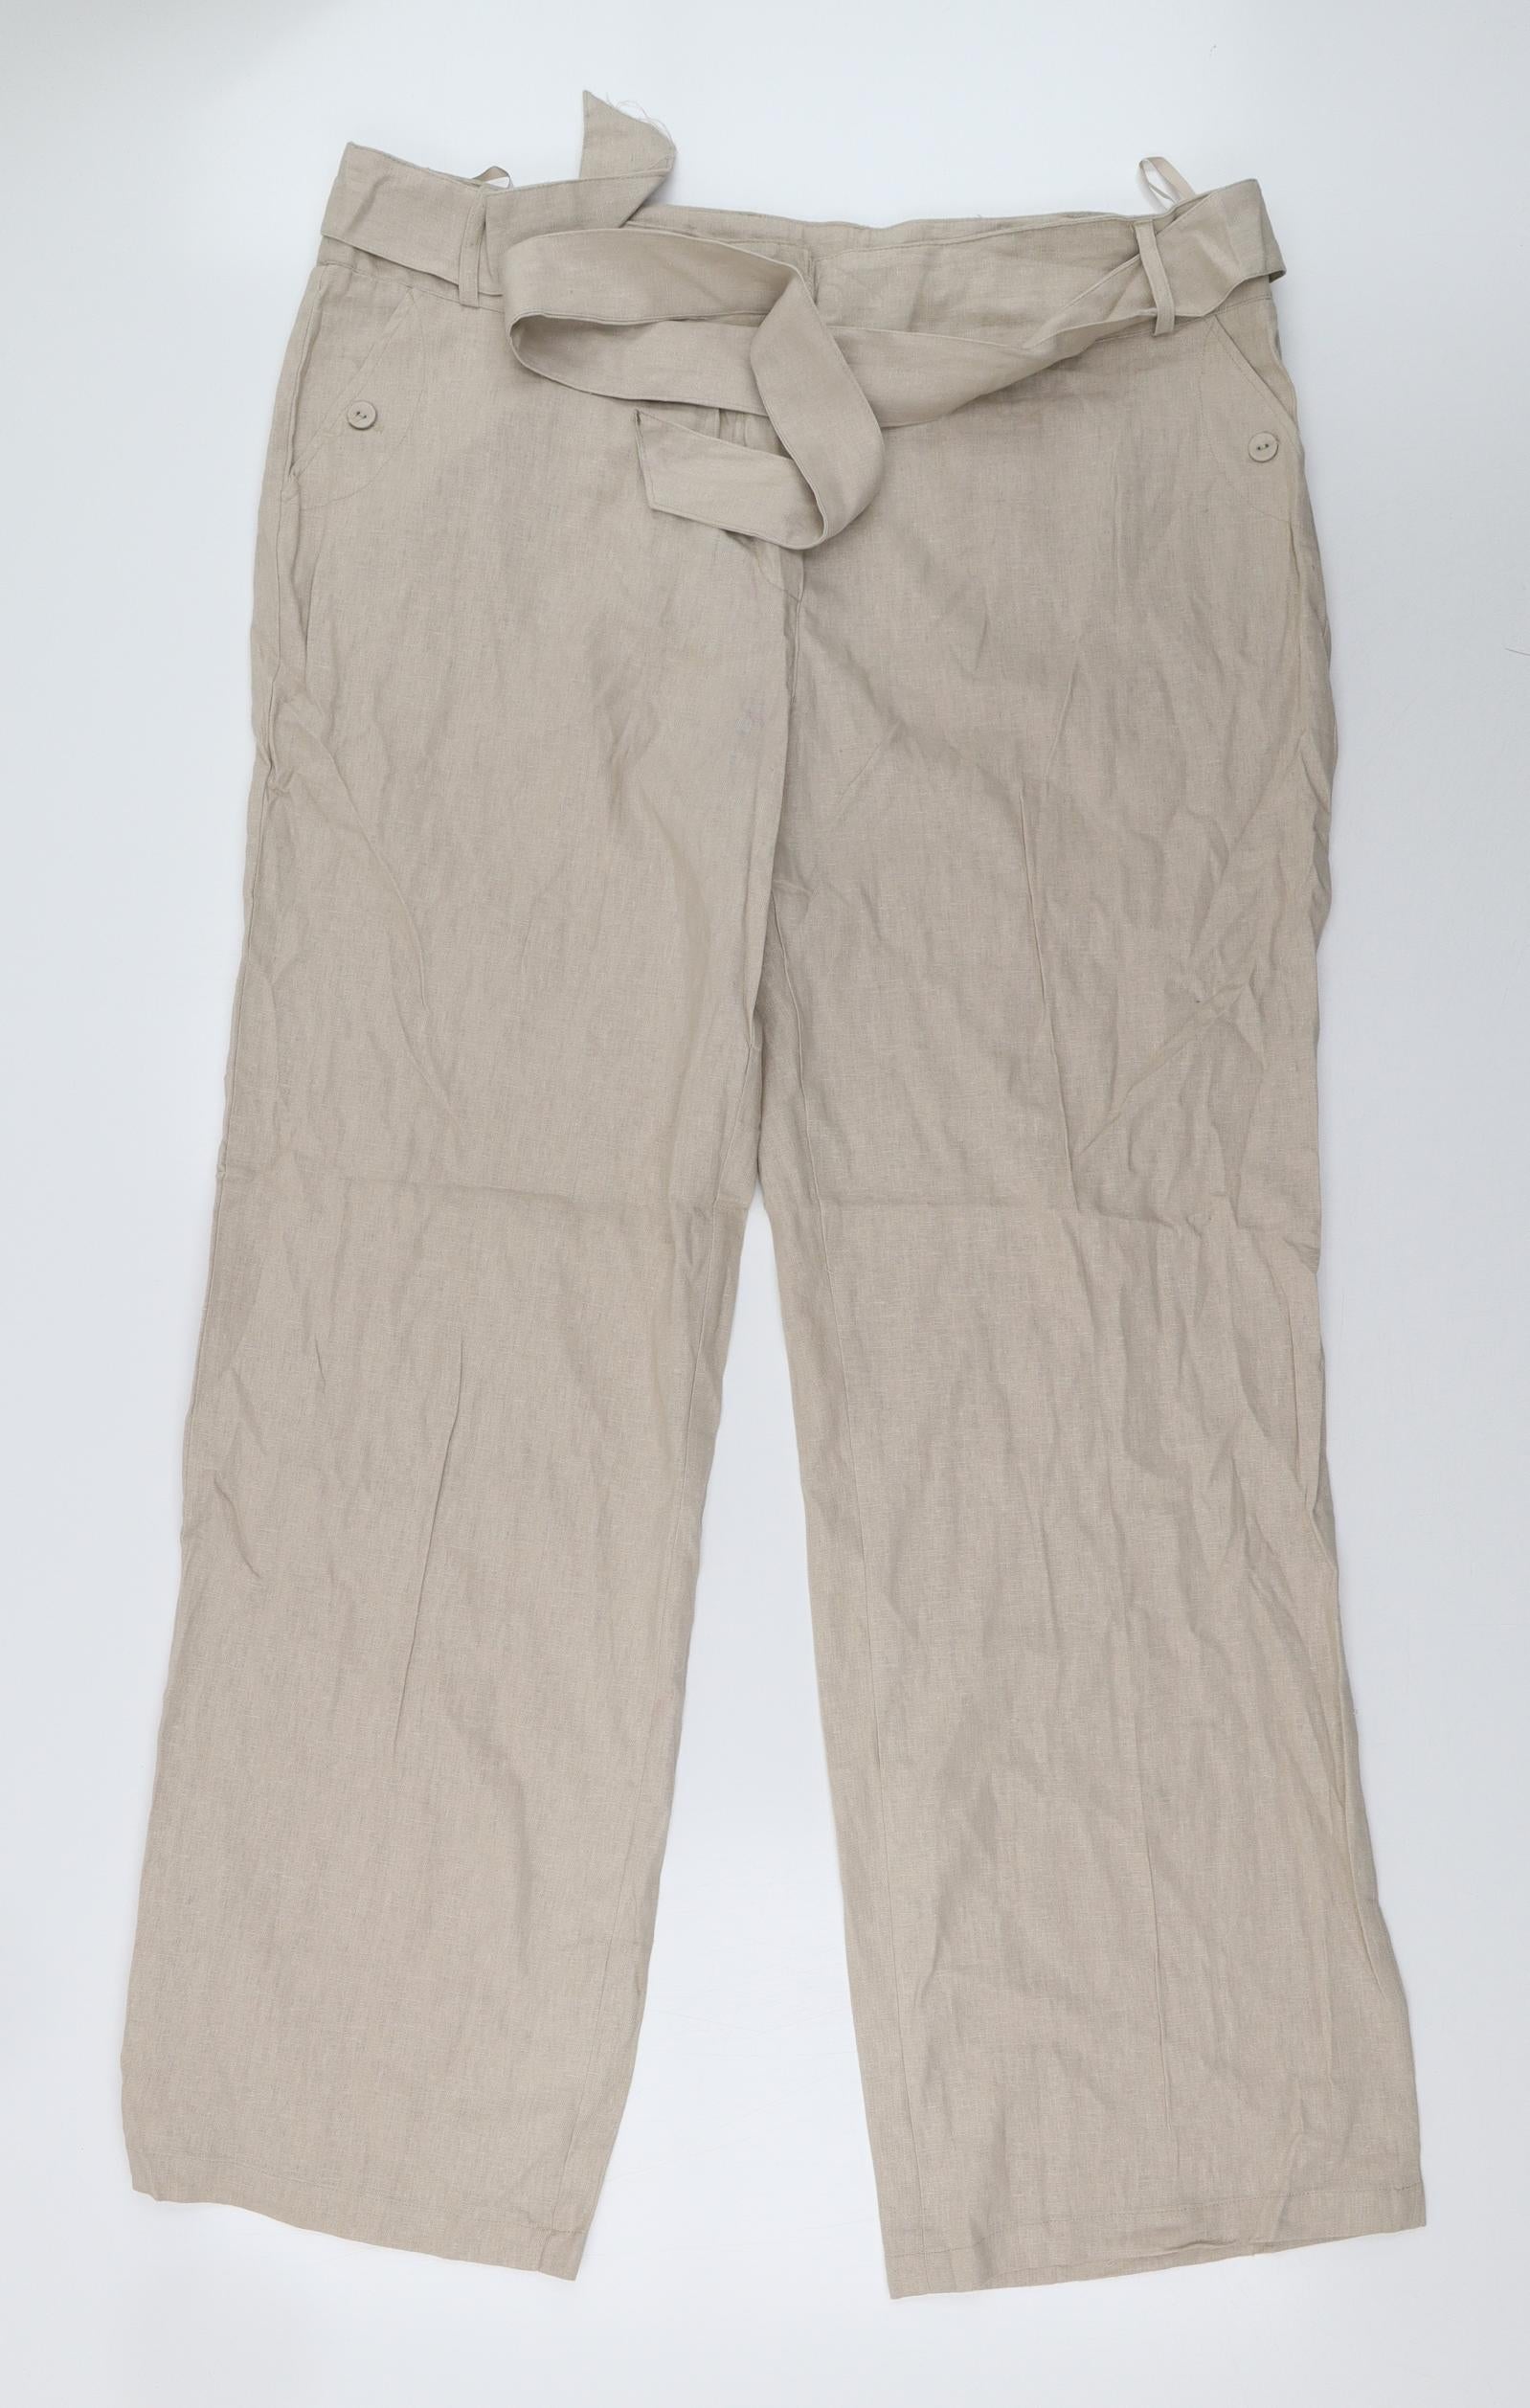 MATALAN Papaya Ladies Wide Leg Button Pocket Trousers Only Size 10 Left   eBay